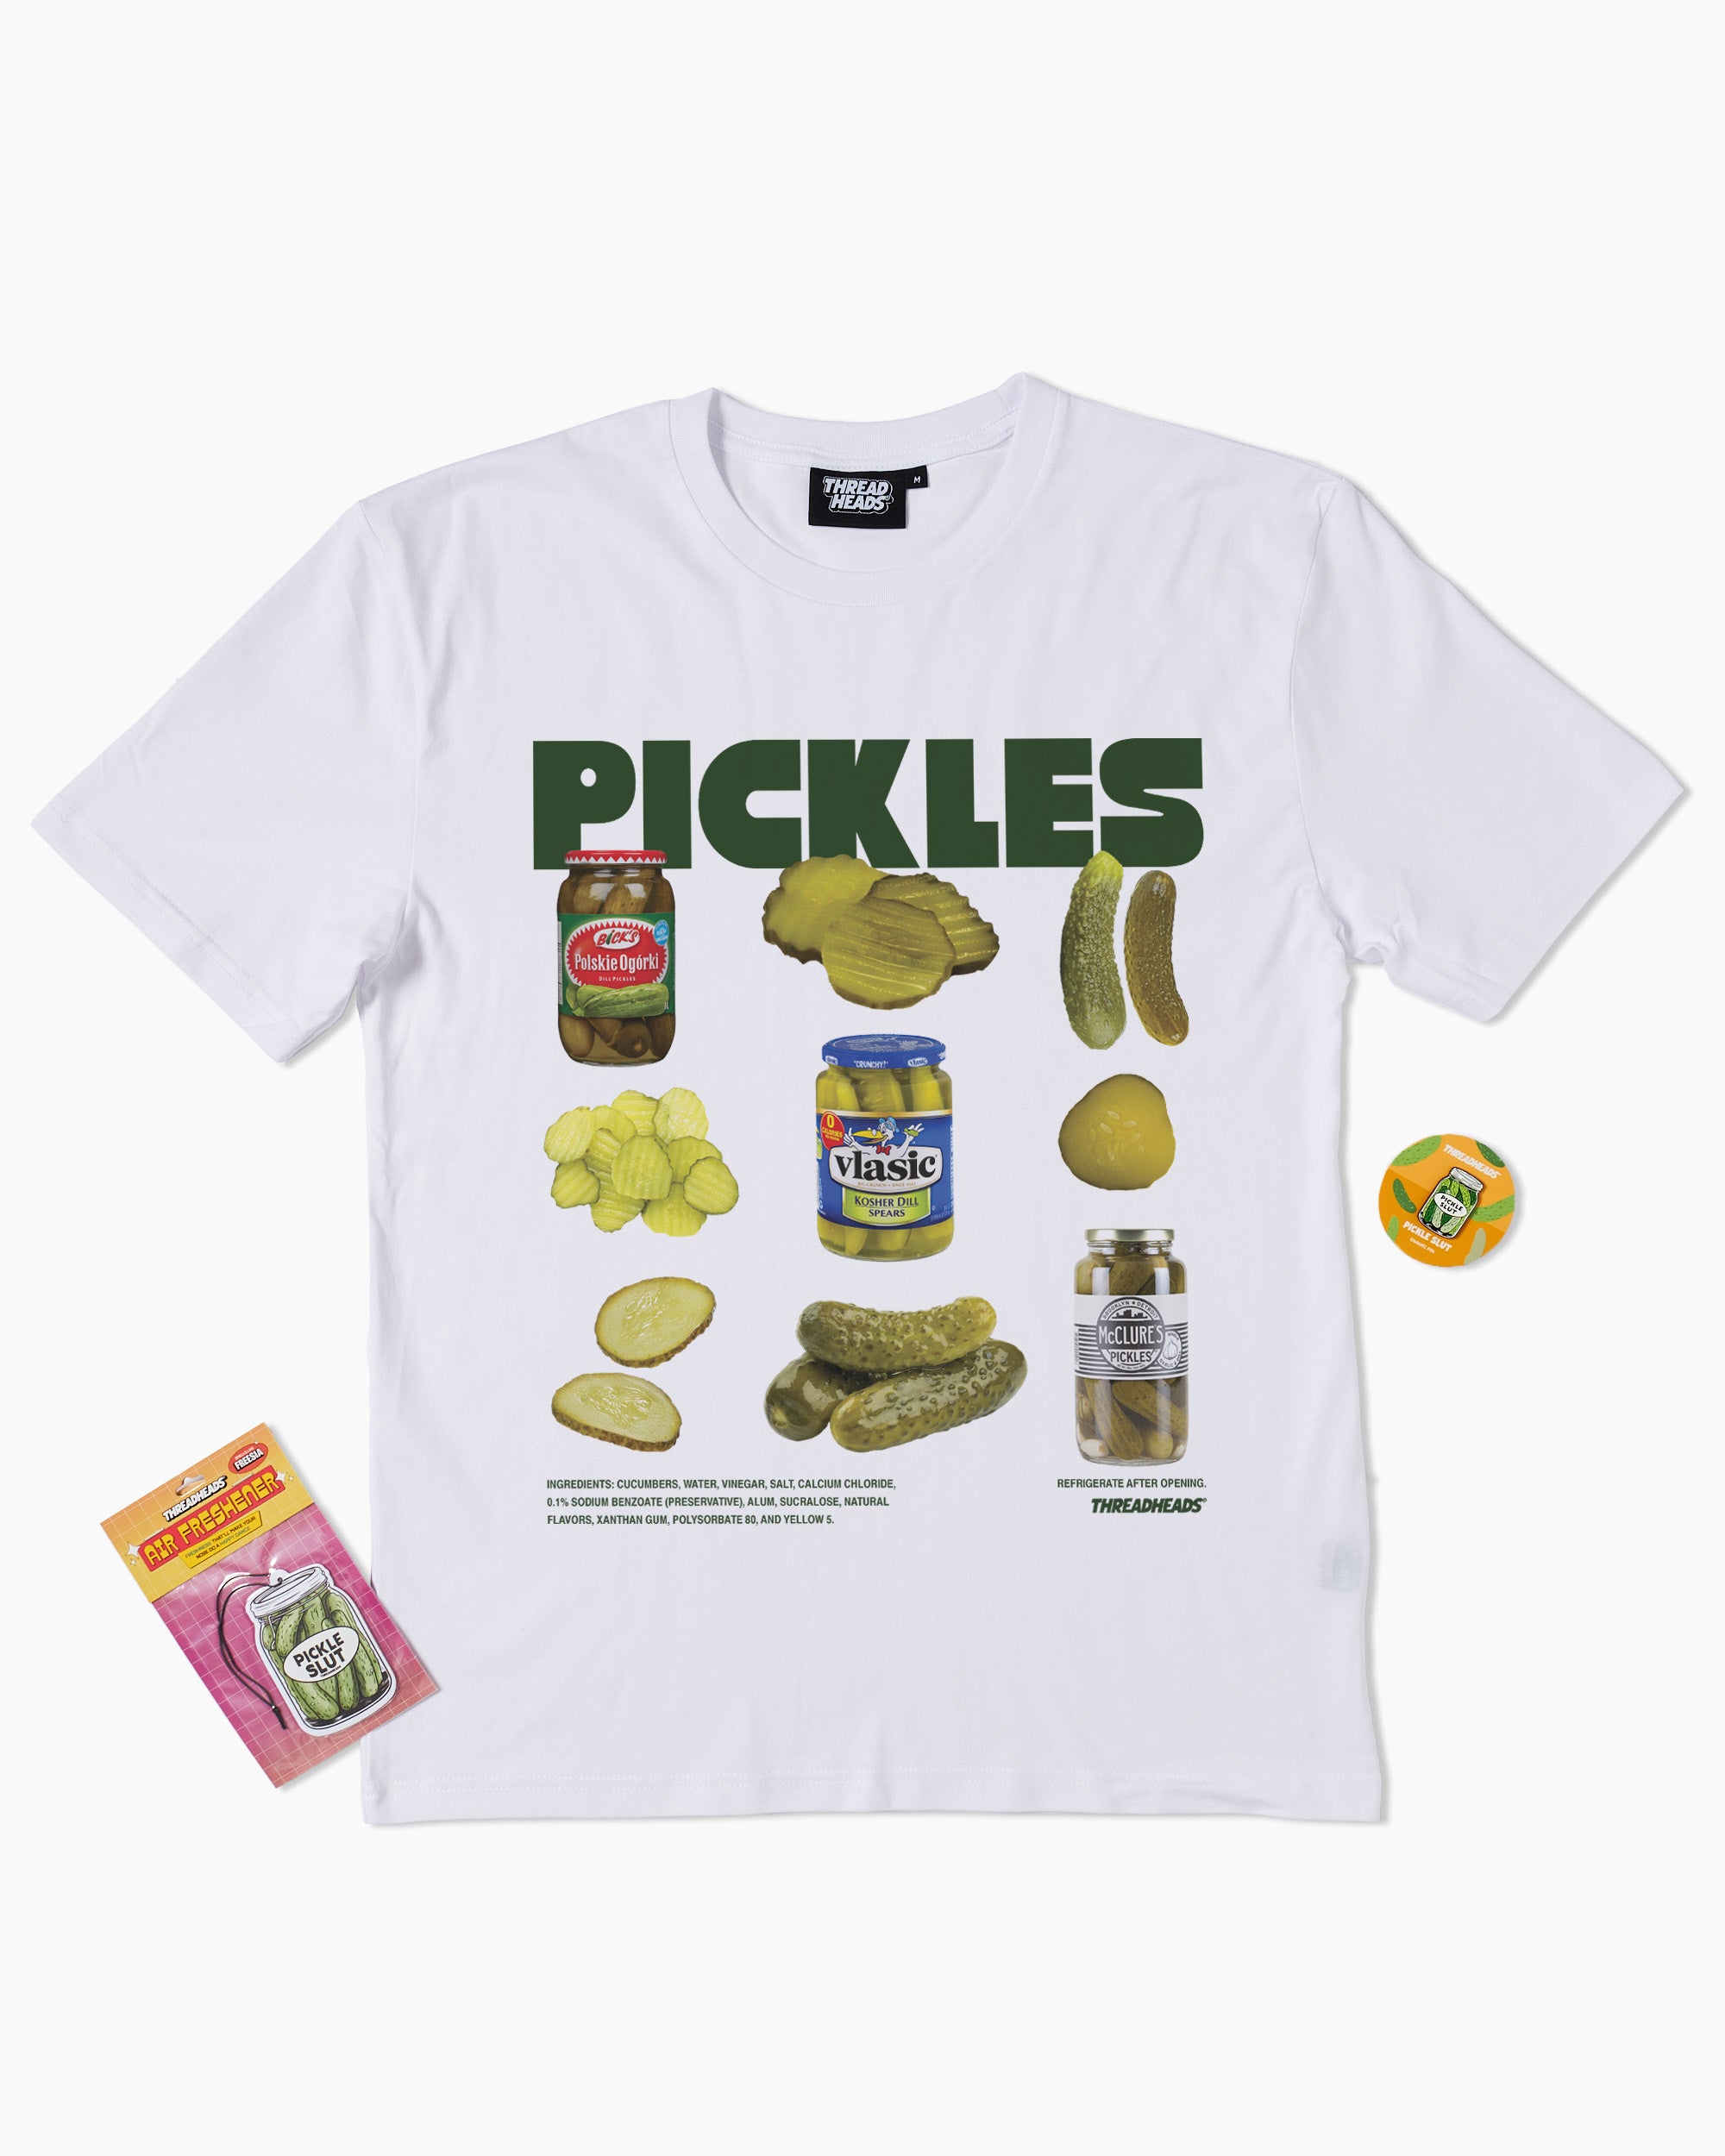 Pickles Bundle | T-Shirt, Air Freshener & Pin Bundle